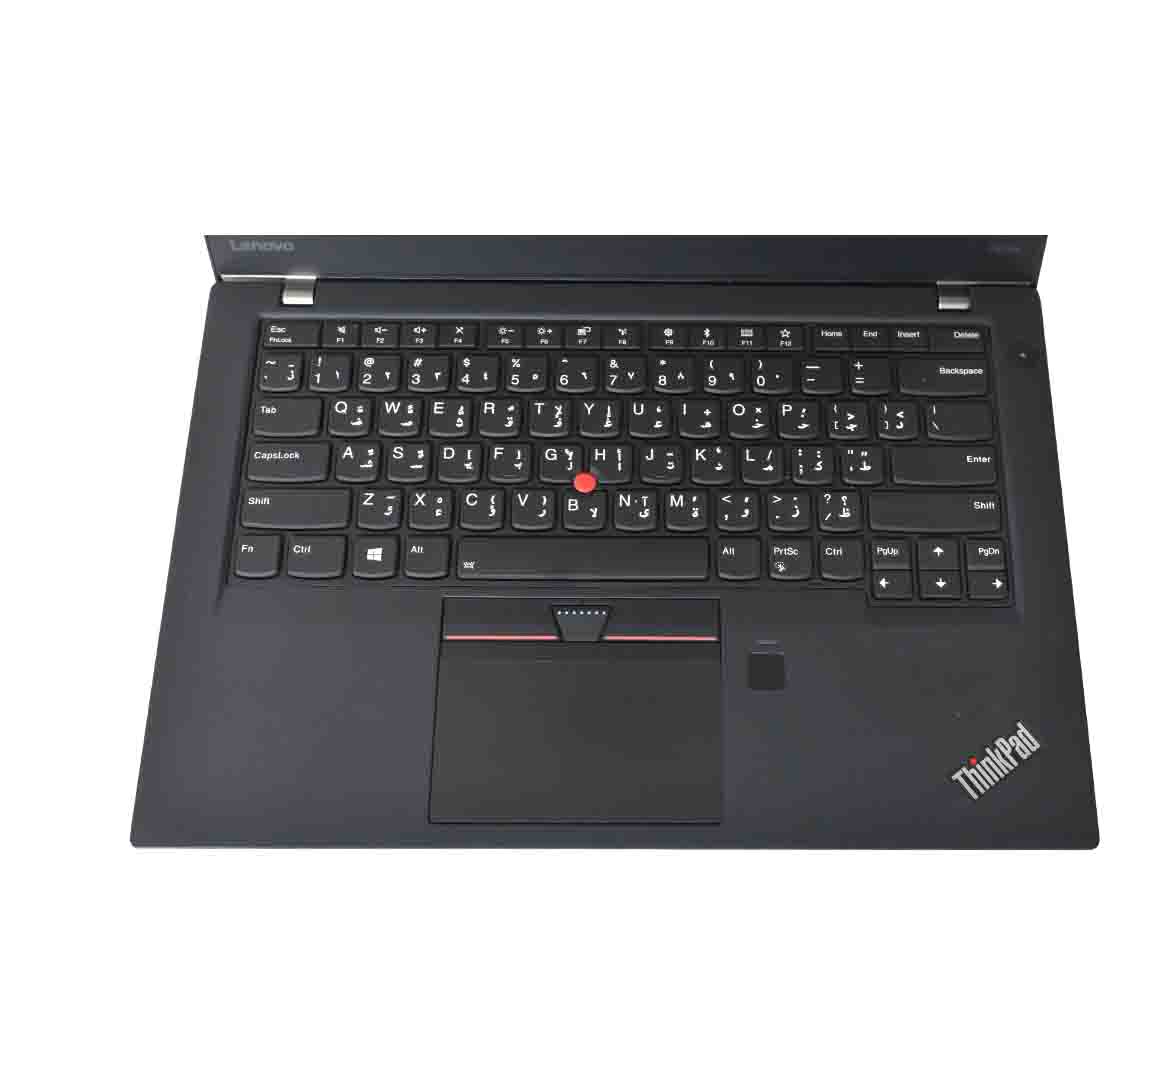 Lenovo ThinkPad T470s Business Laptop, Intel Core i7-7th Generation CPU, 16GB RAM, 512GB SSD, 14 inch Touchscreen, Windows 10 Pro